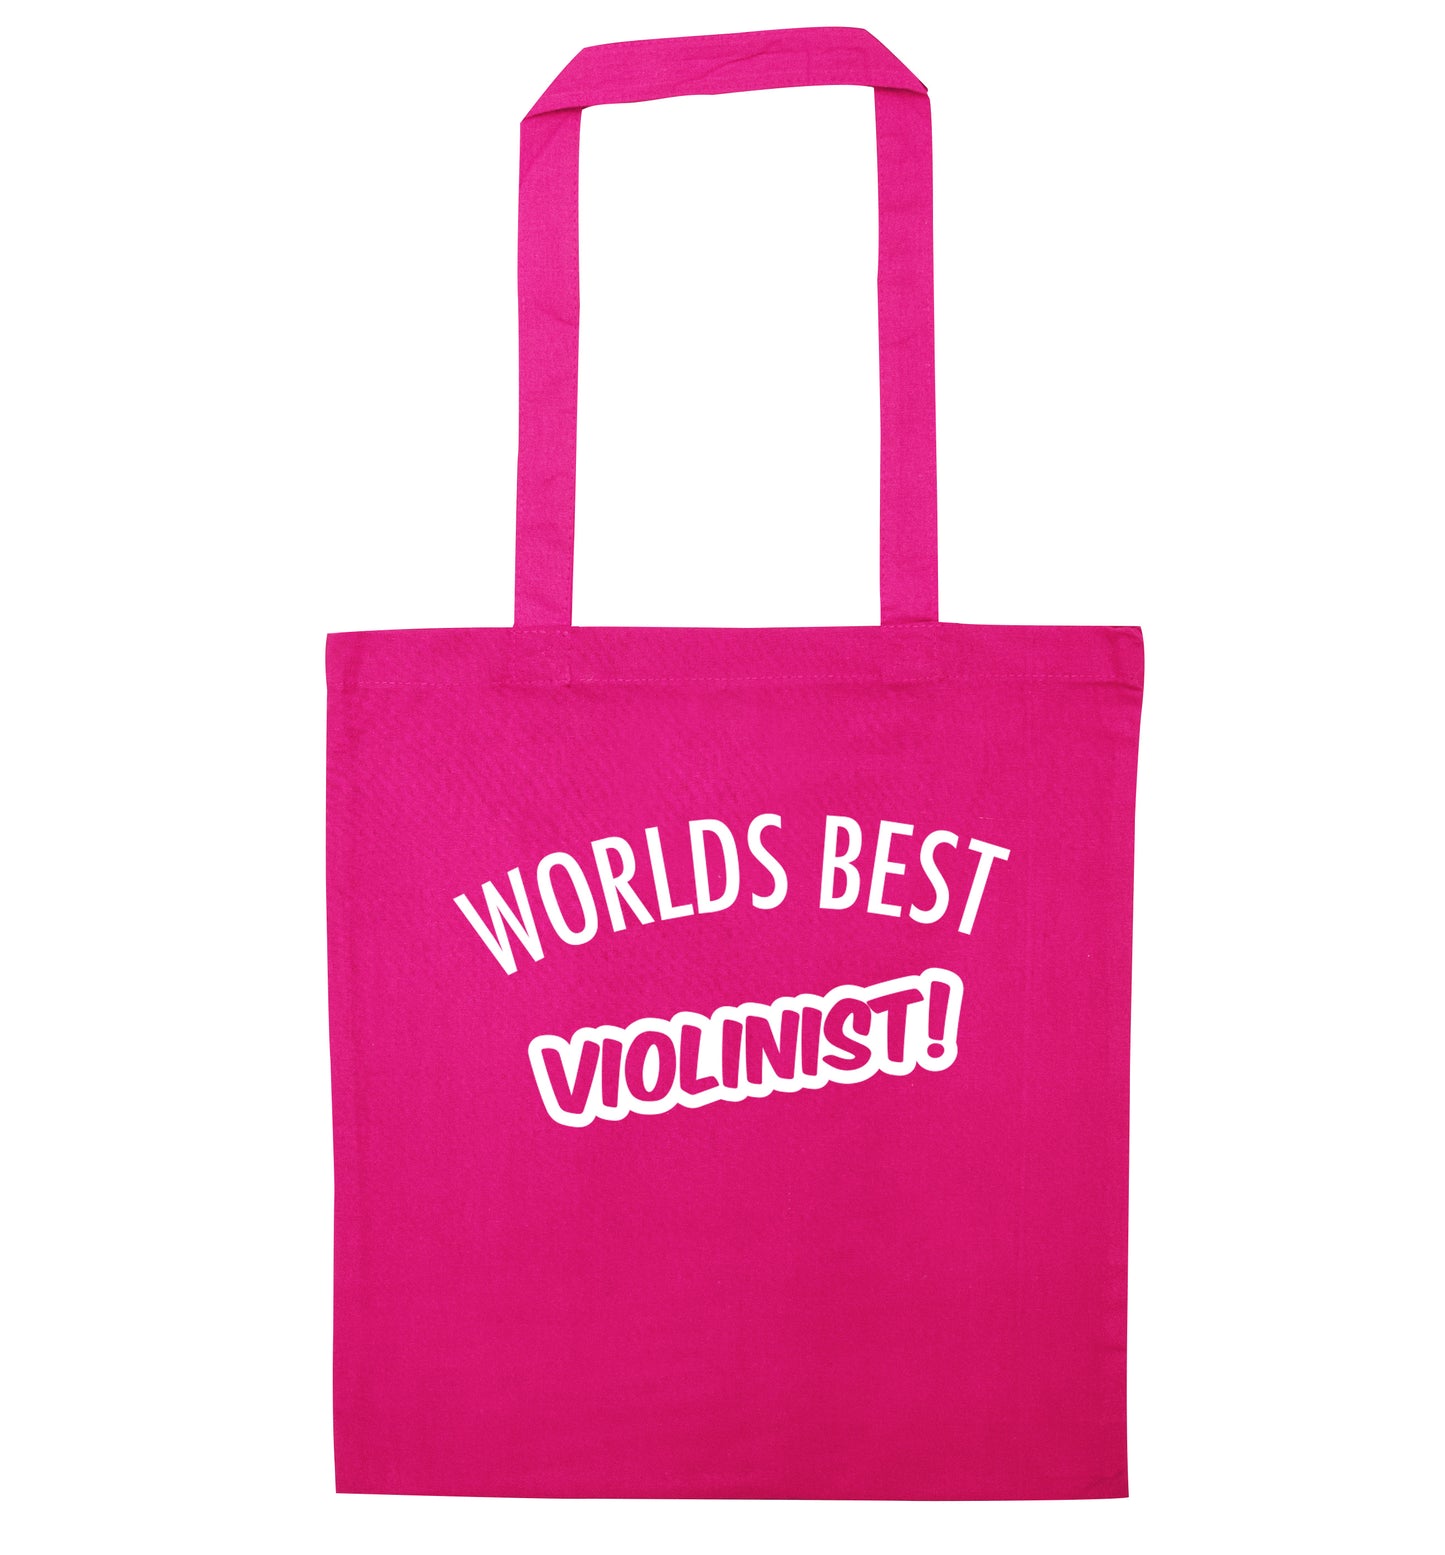 Worlds best violinist pink tote bag